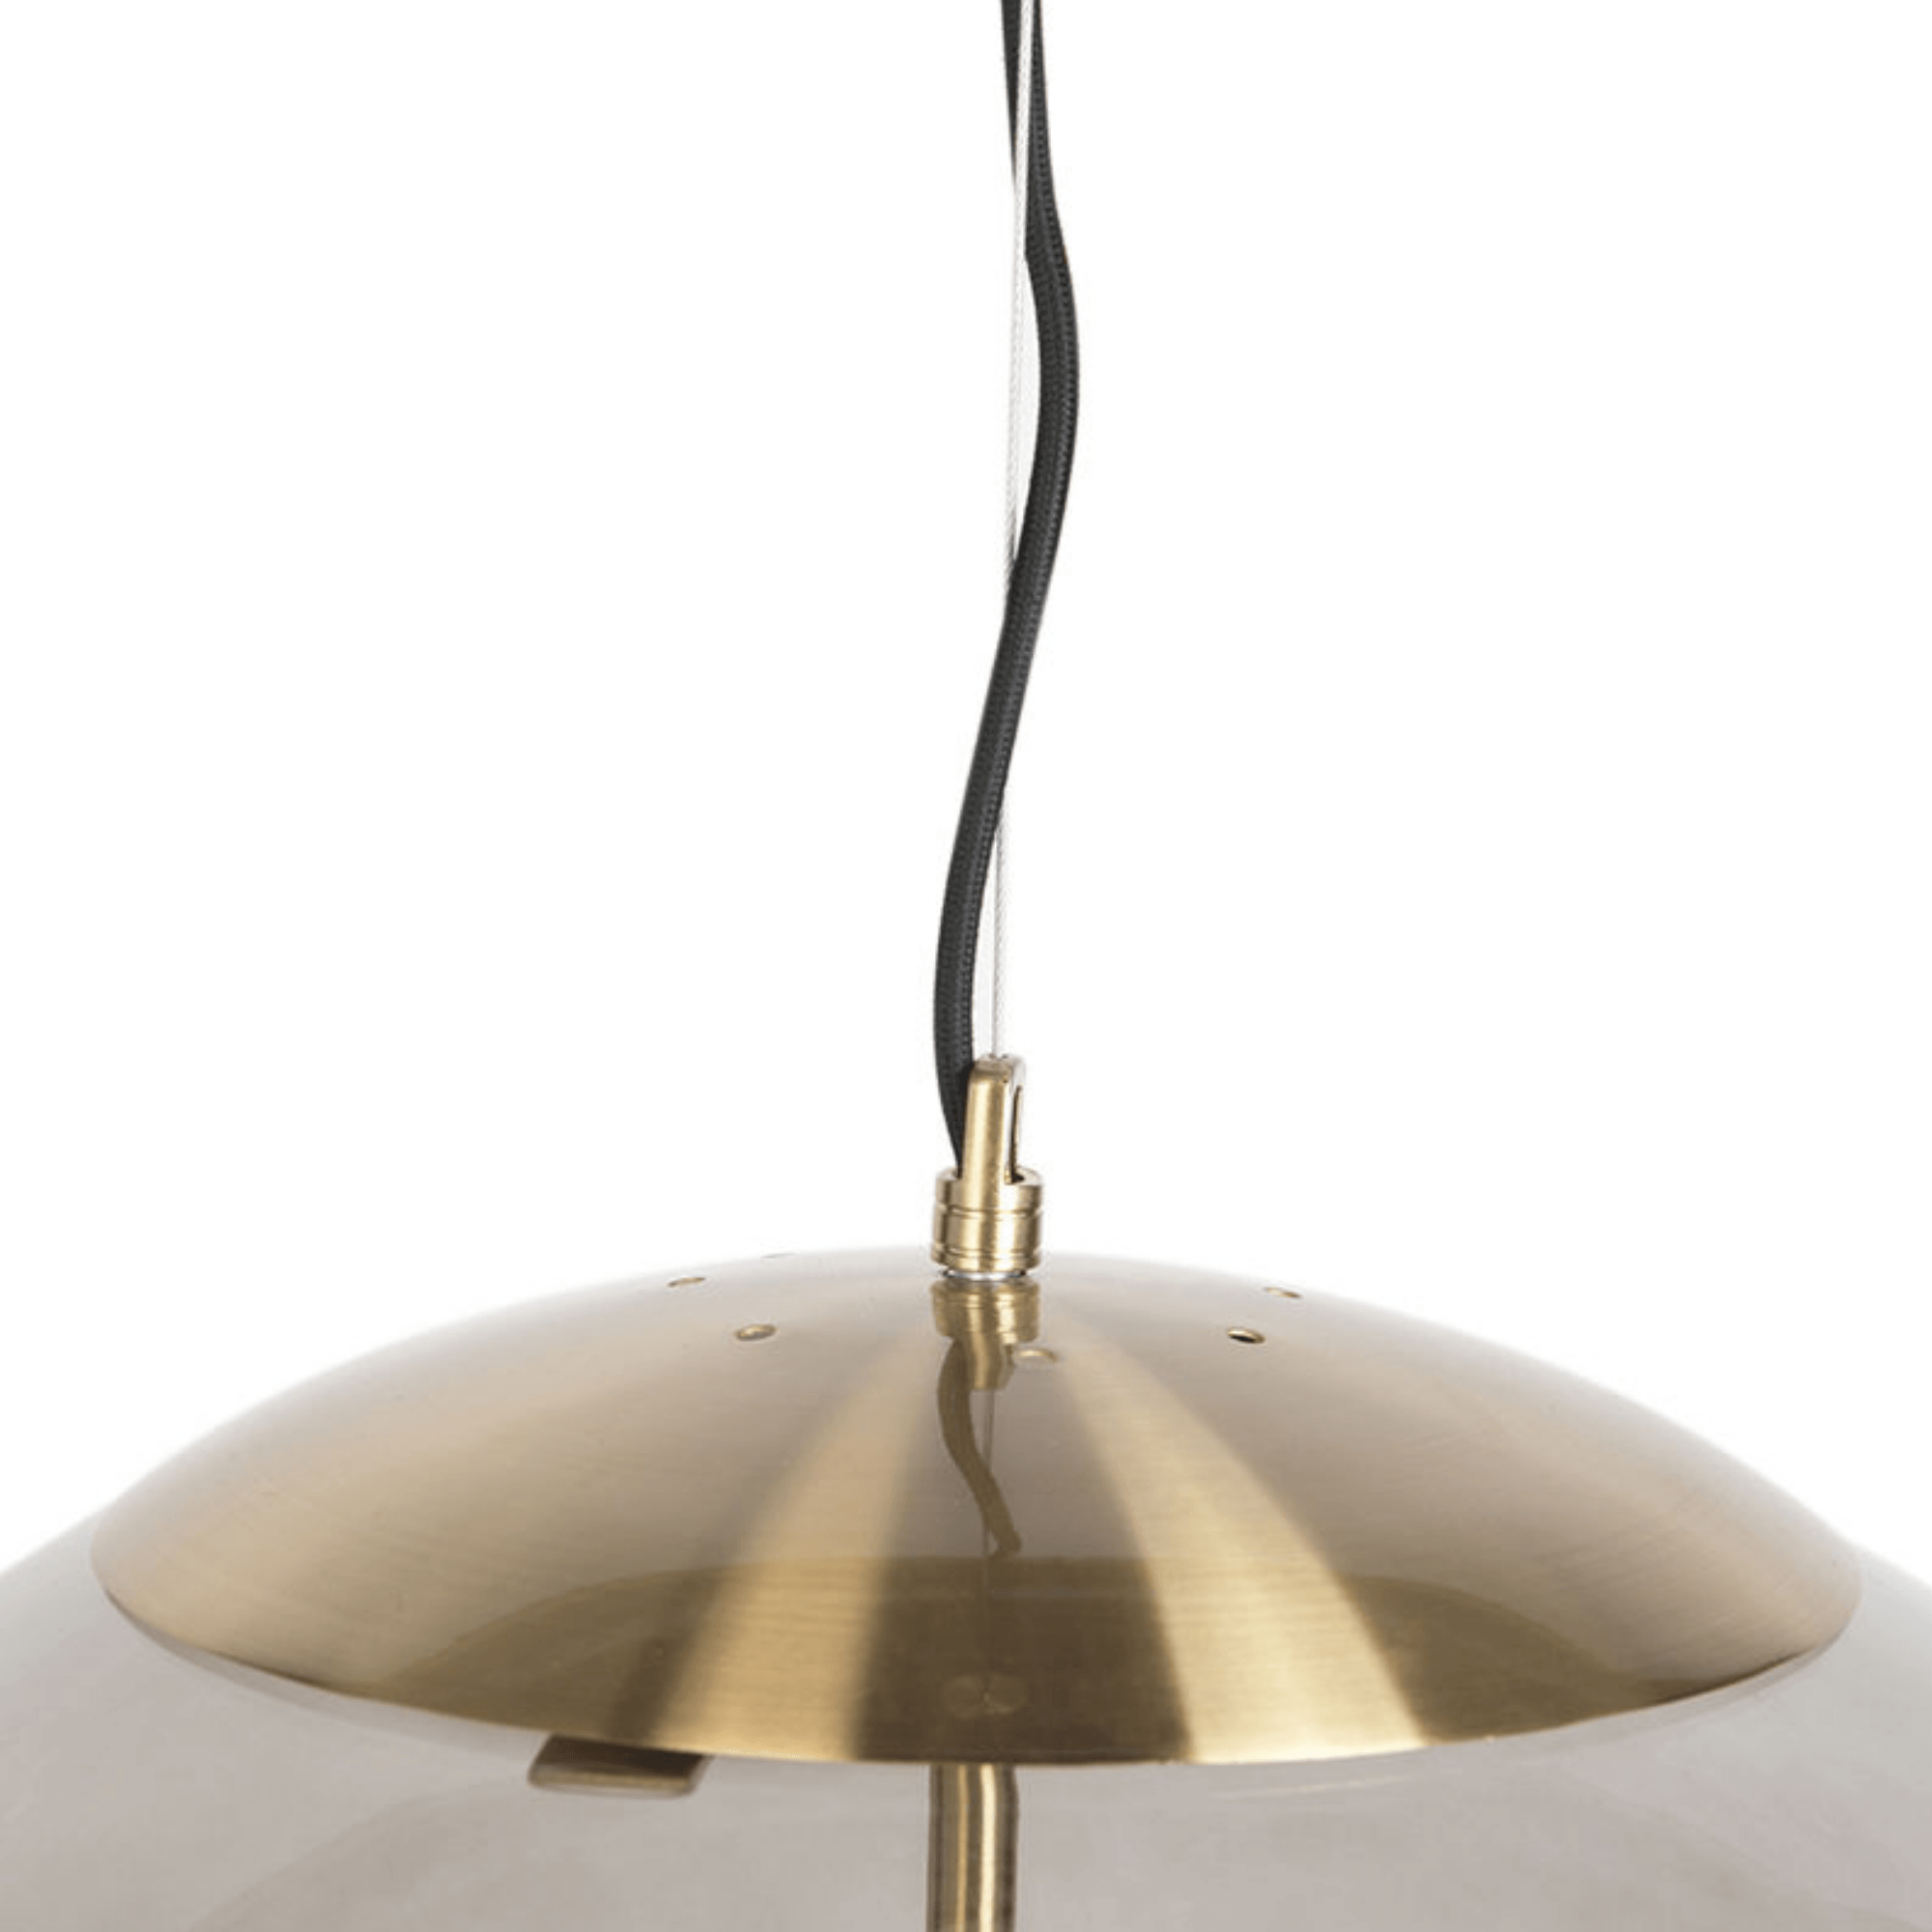 1 Modern hanging lamp brass with smoke glass 50 cm - Ball - Cusack Lighting